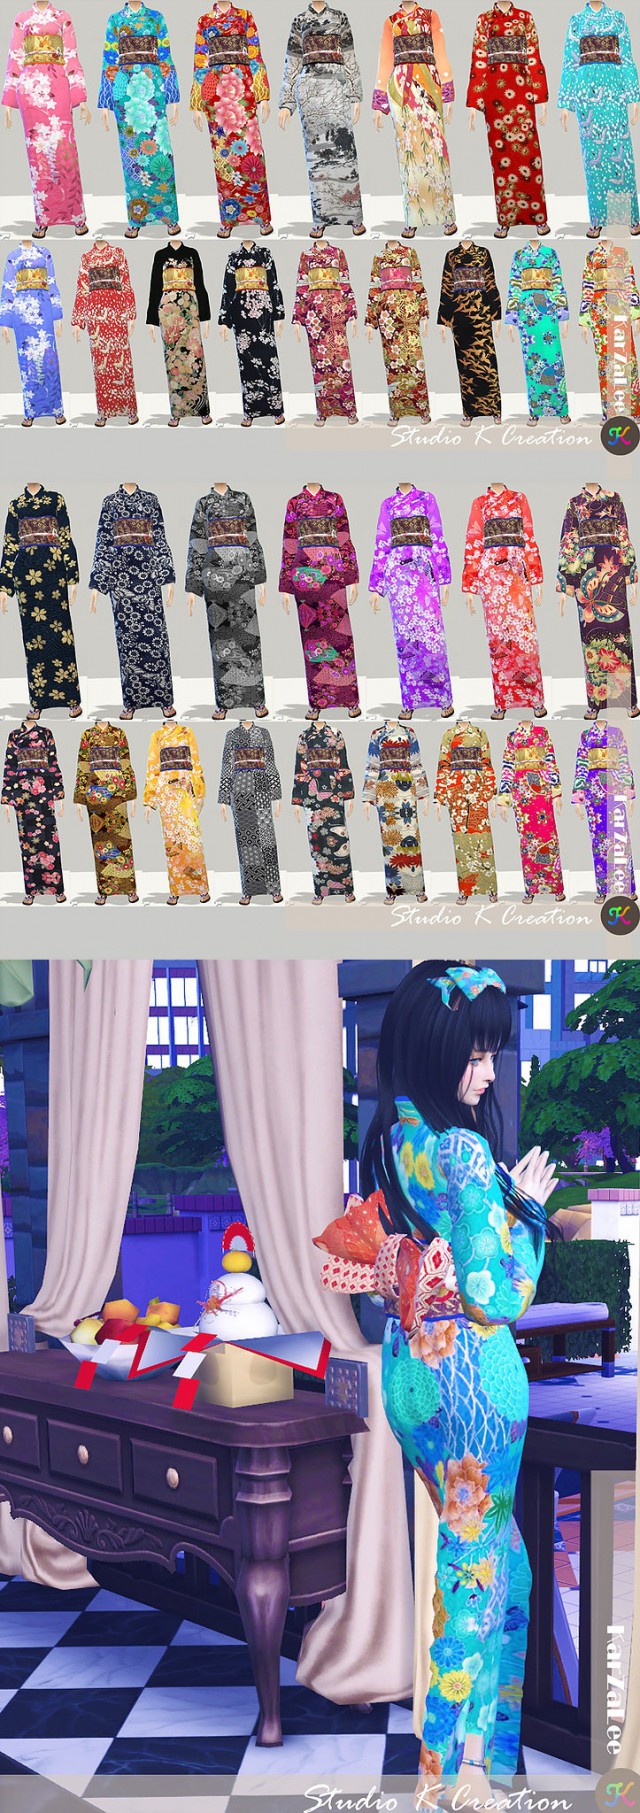 Кимоно Japanese Kimono By Karzalee Женская одежда для Sims 4 Одежда